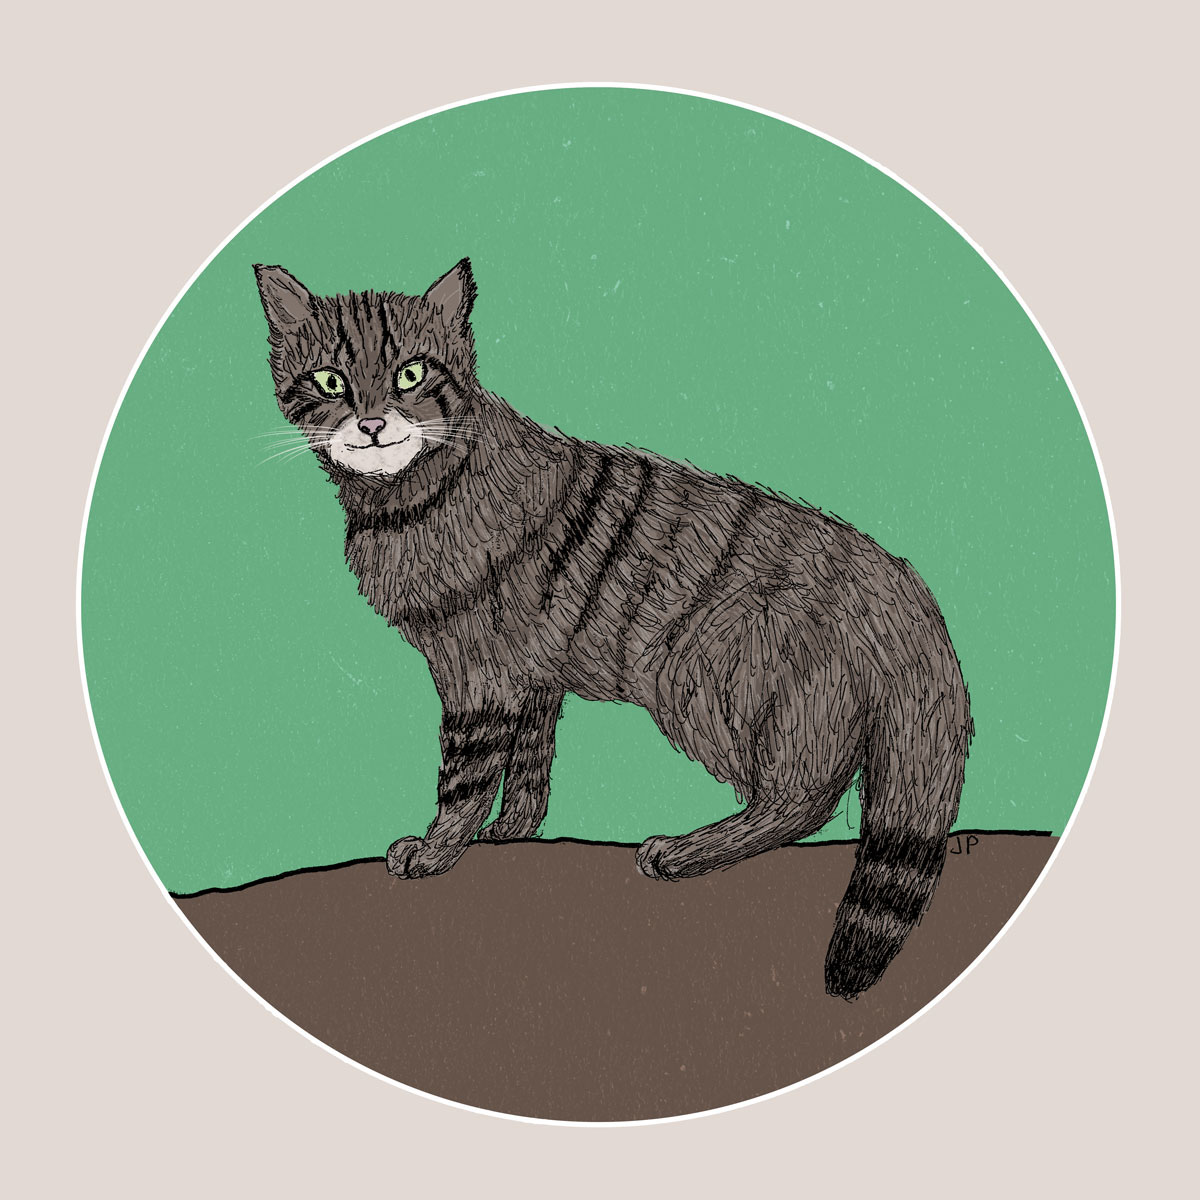 ILLUSTRATION  Cat scottish wildcat endangered animal britain scotland